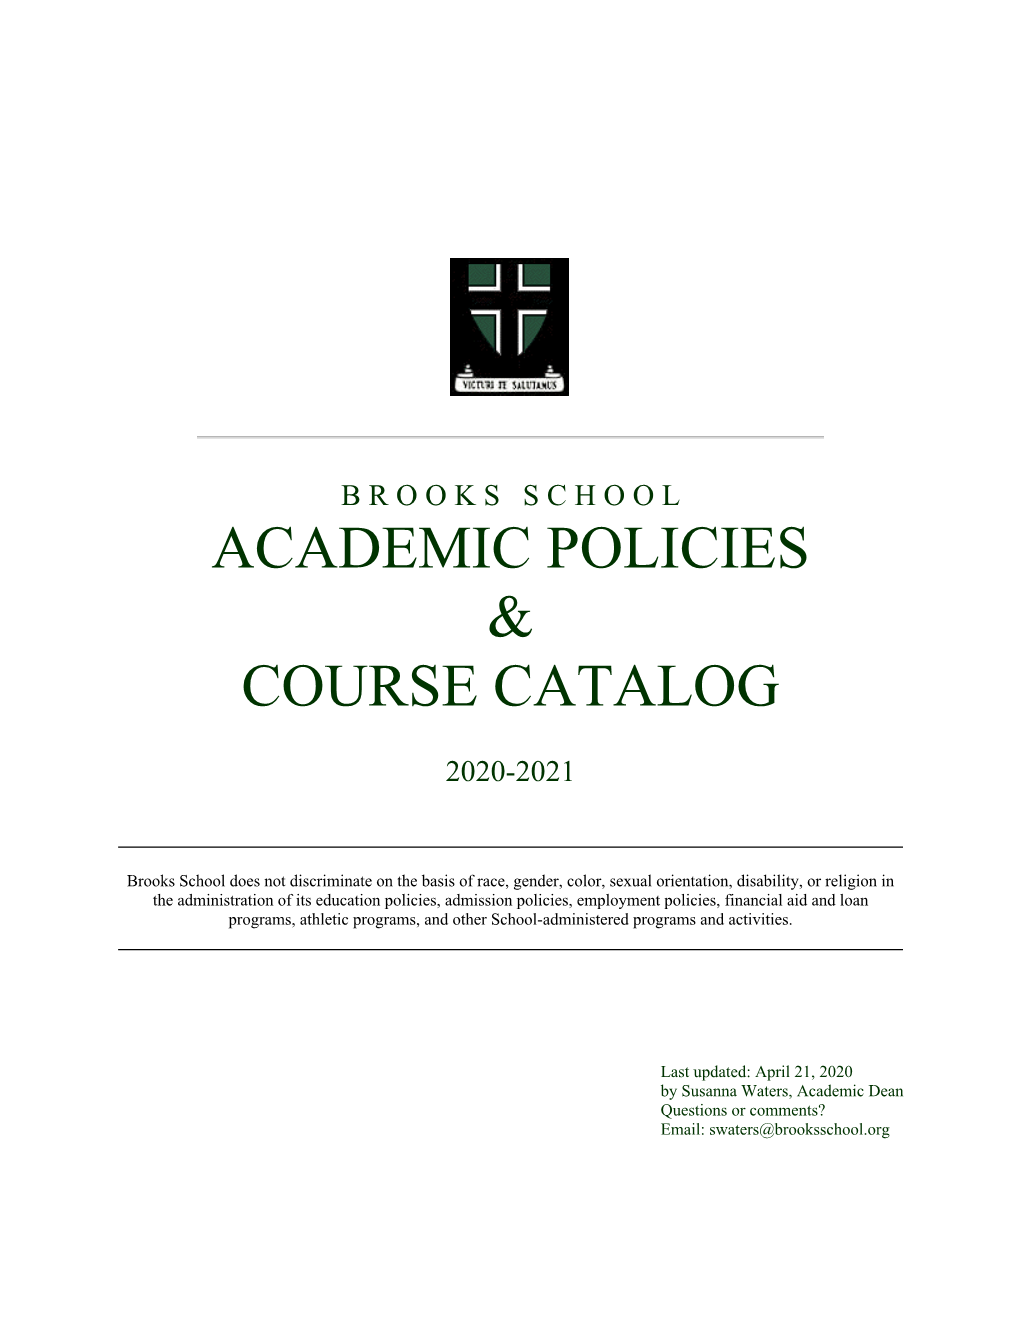 Academic Policies & Course Catalog